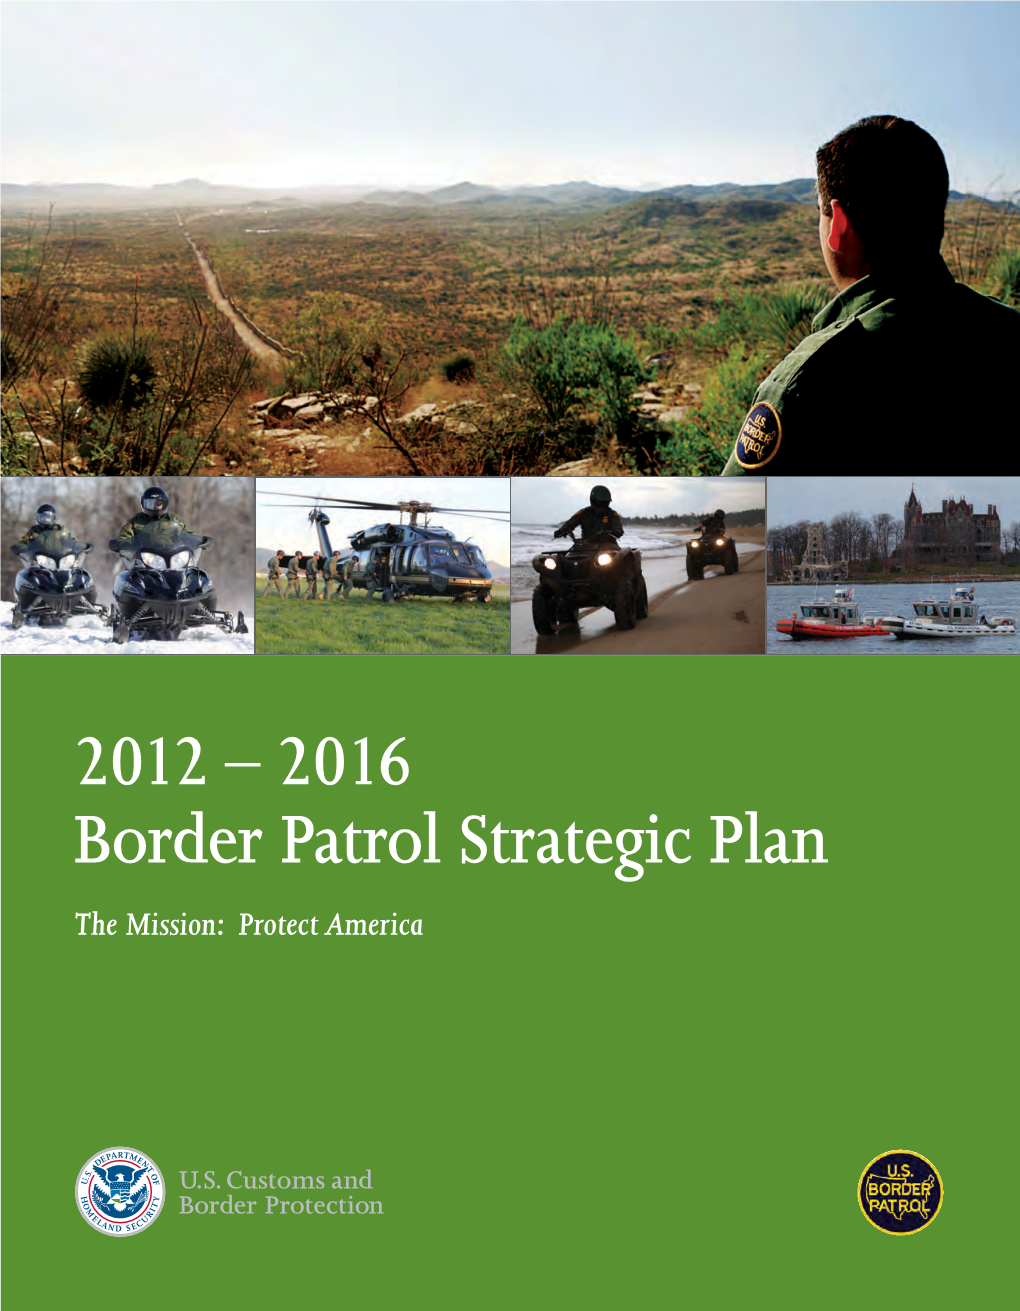 Border Patrol Strategic Plan 2012